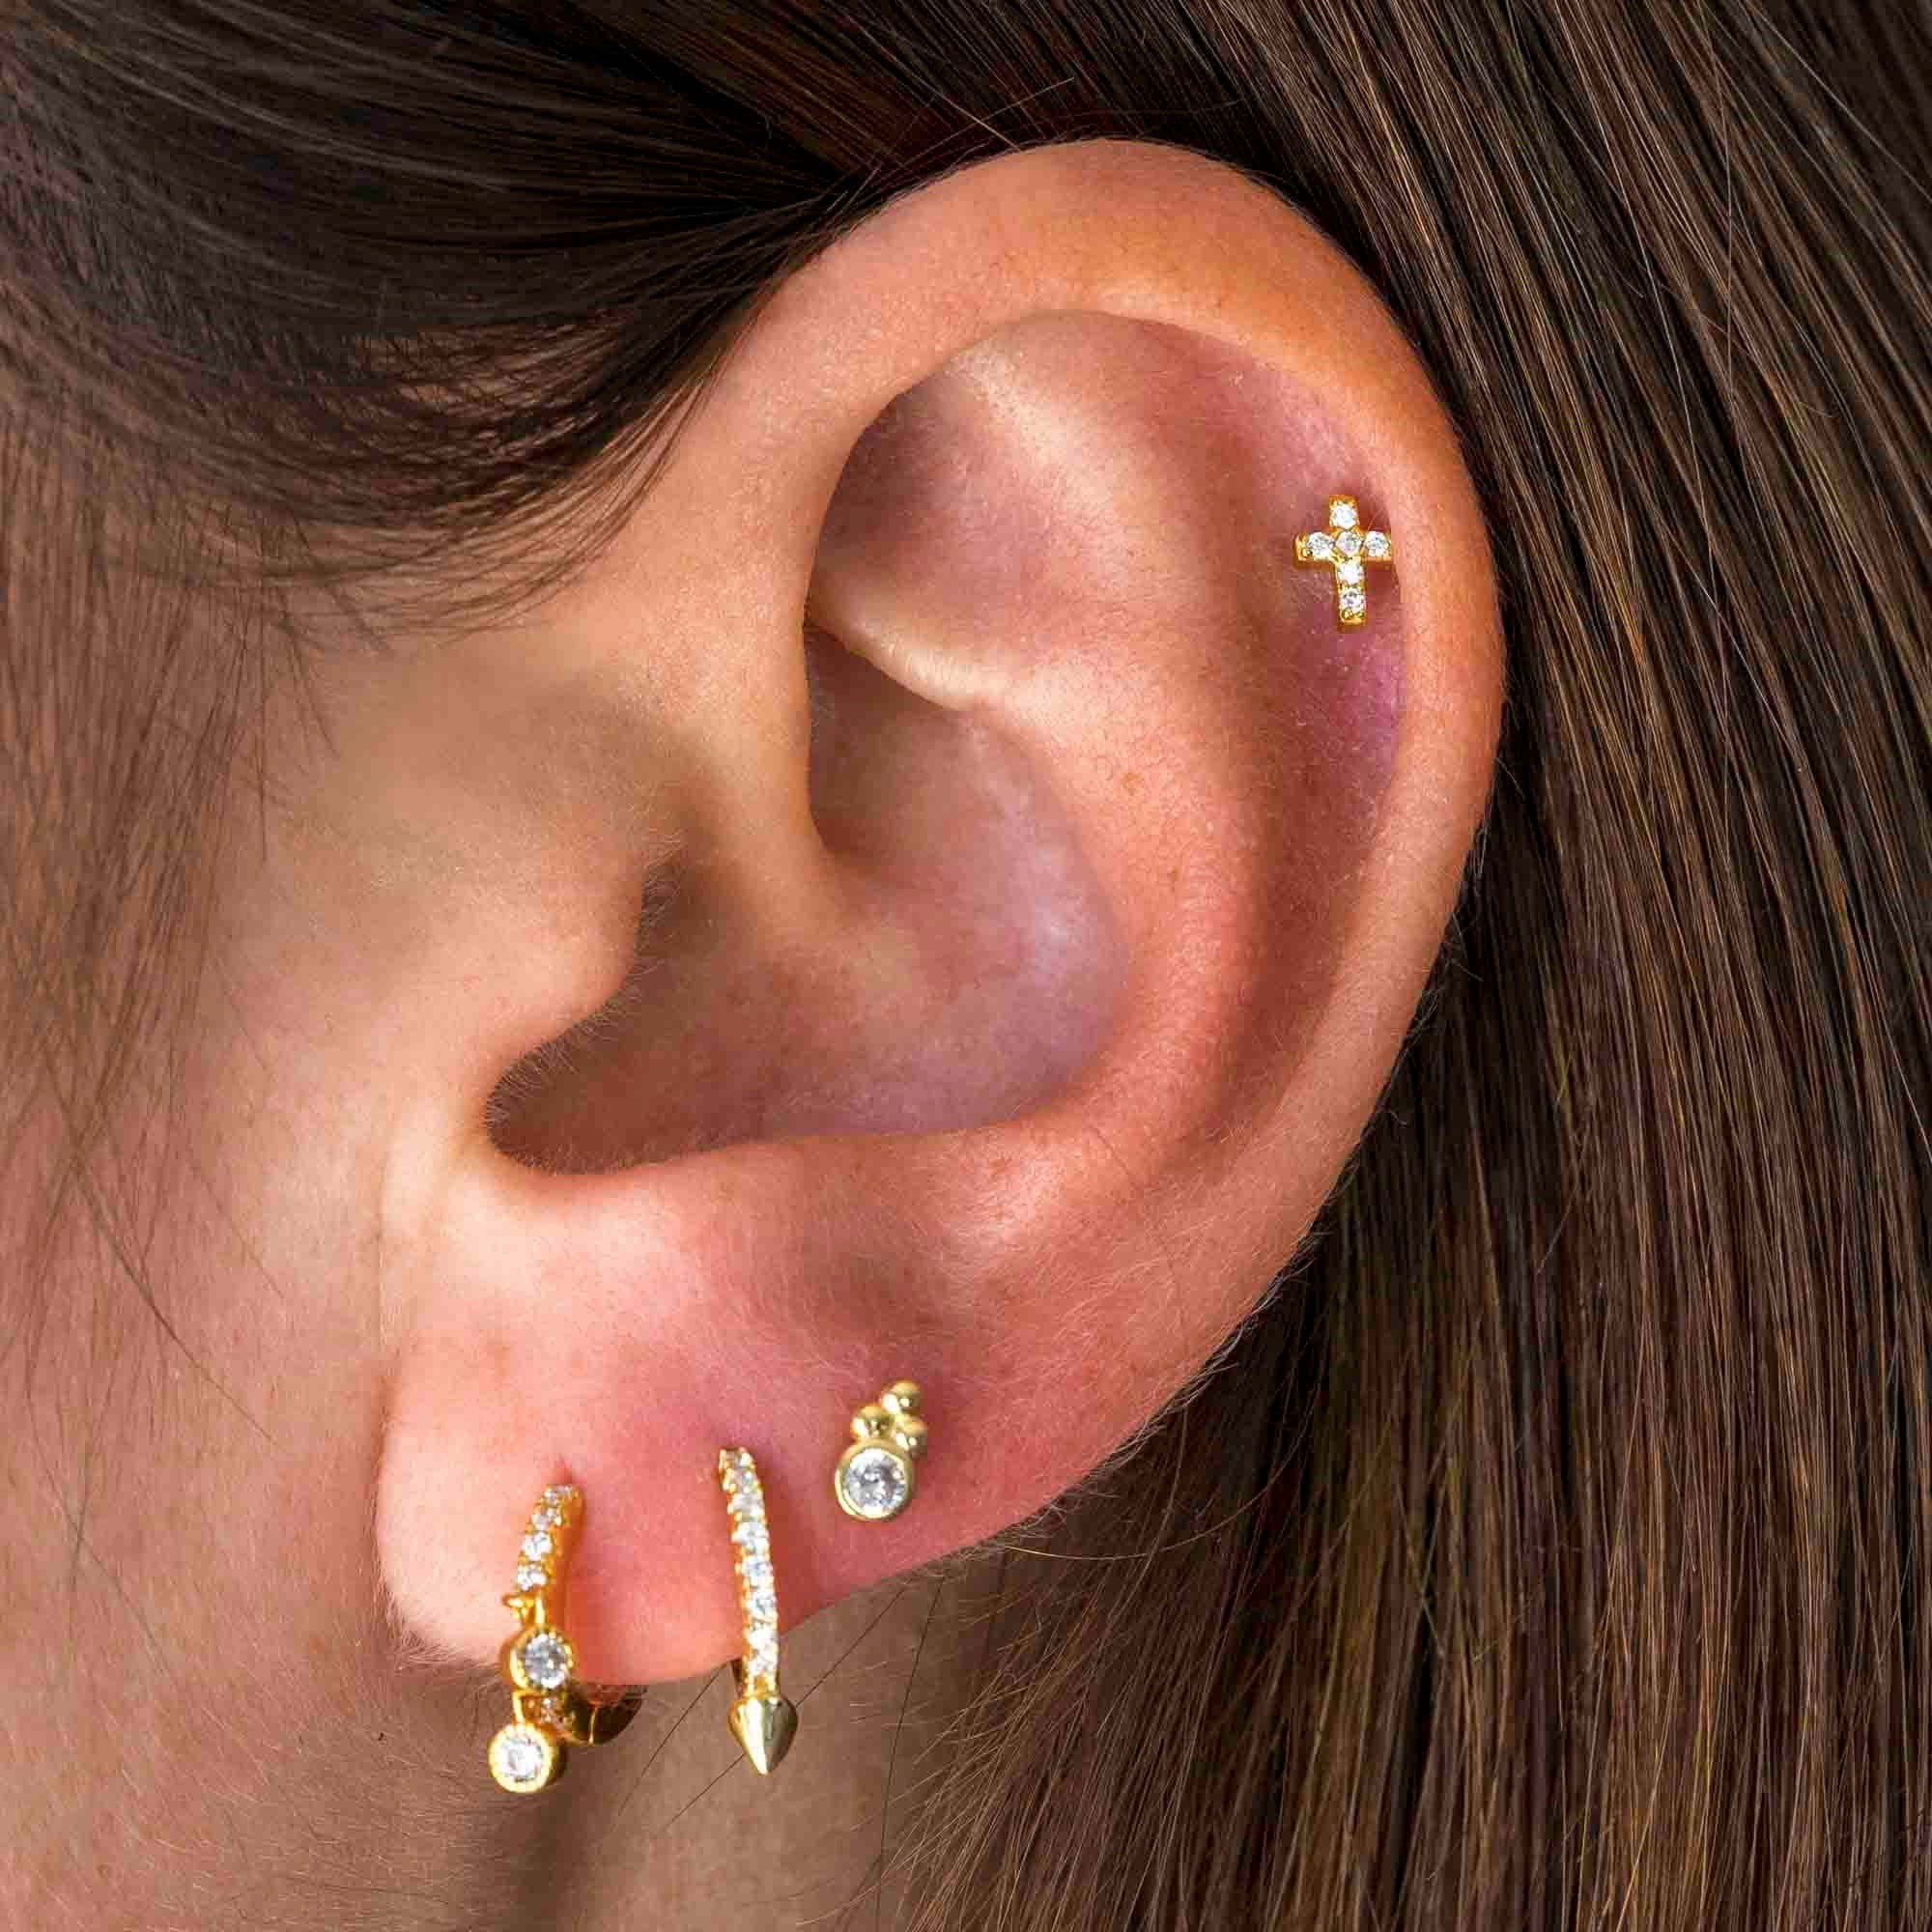 Signature Large Earring Backs in Gold | Julie Vos